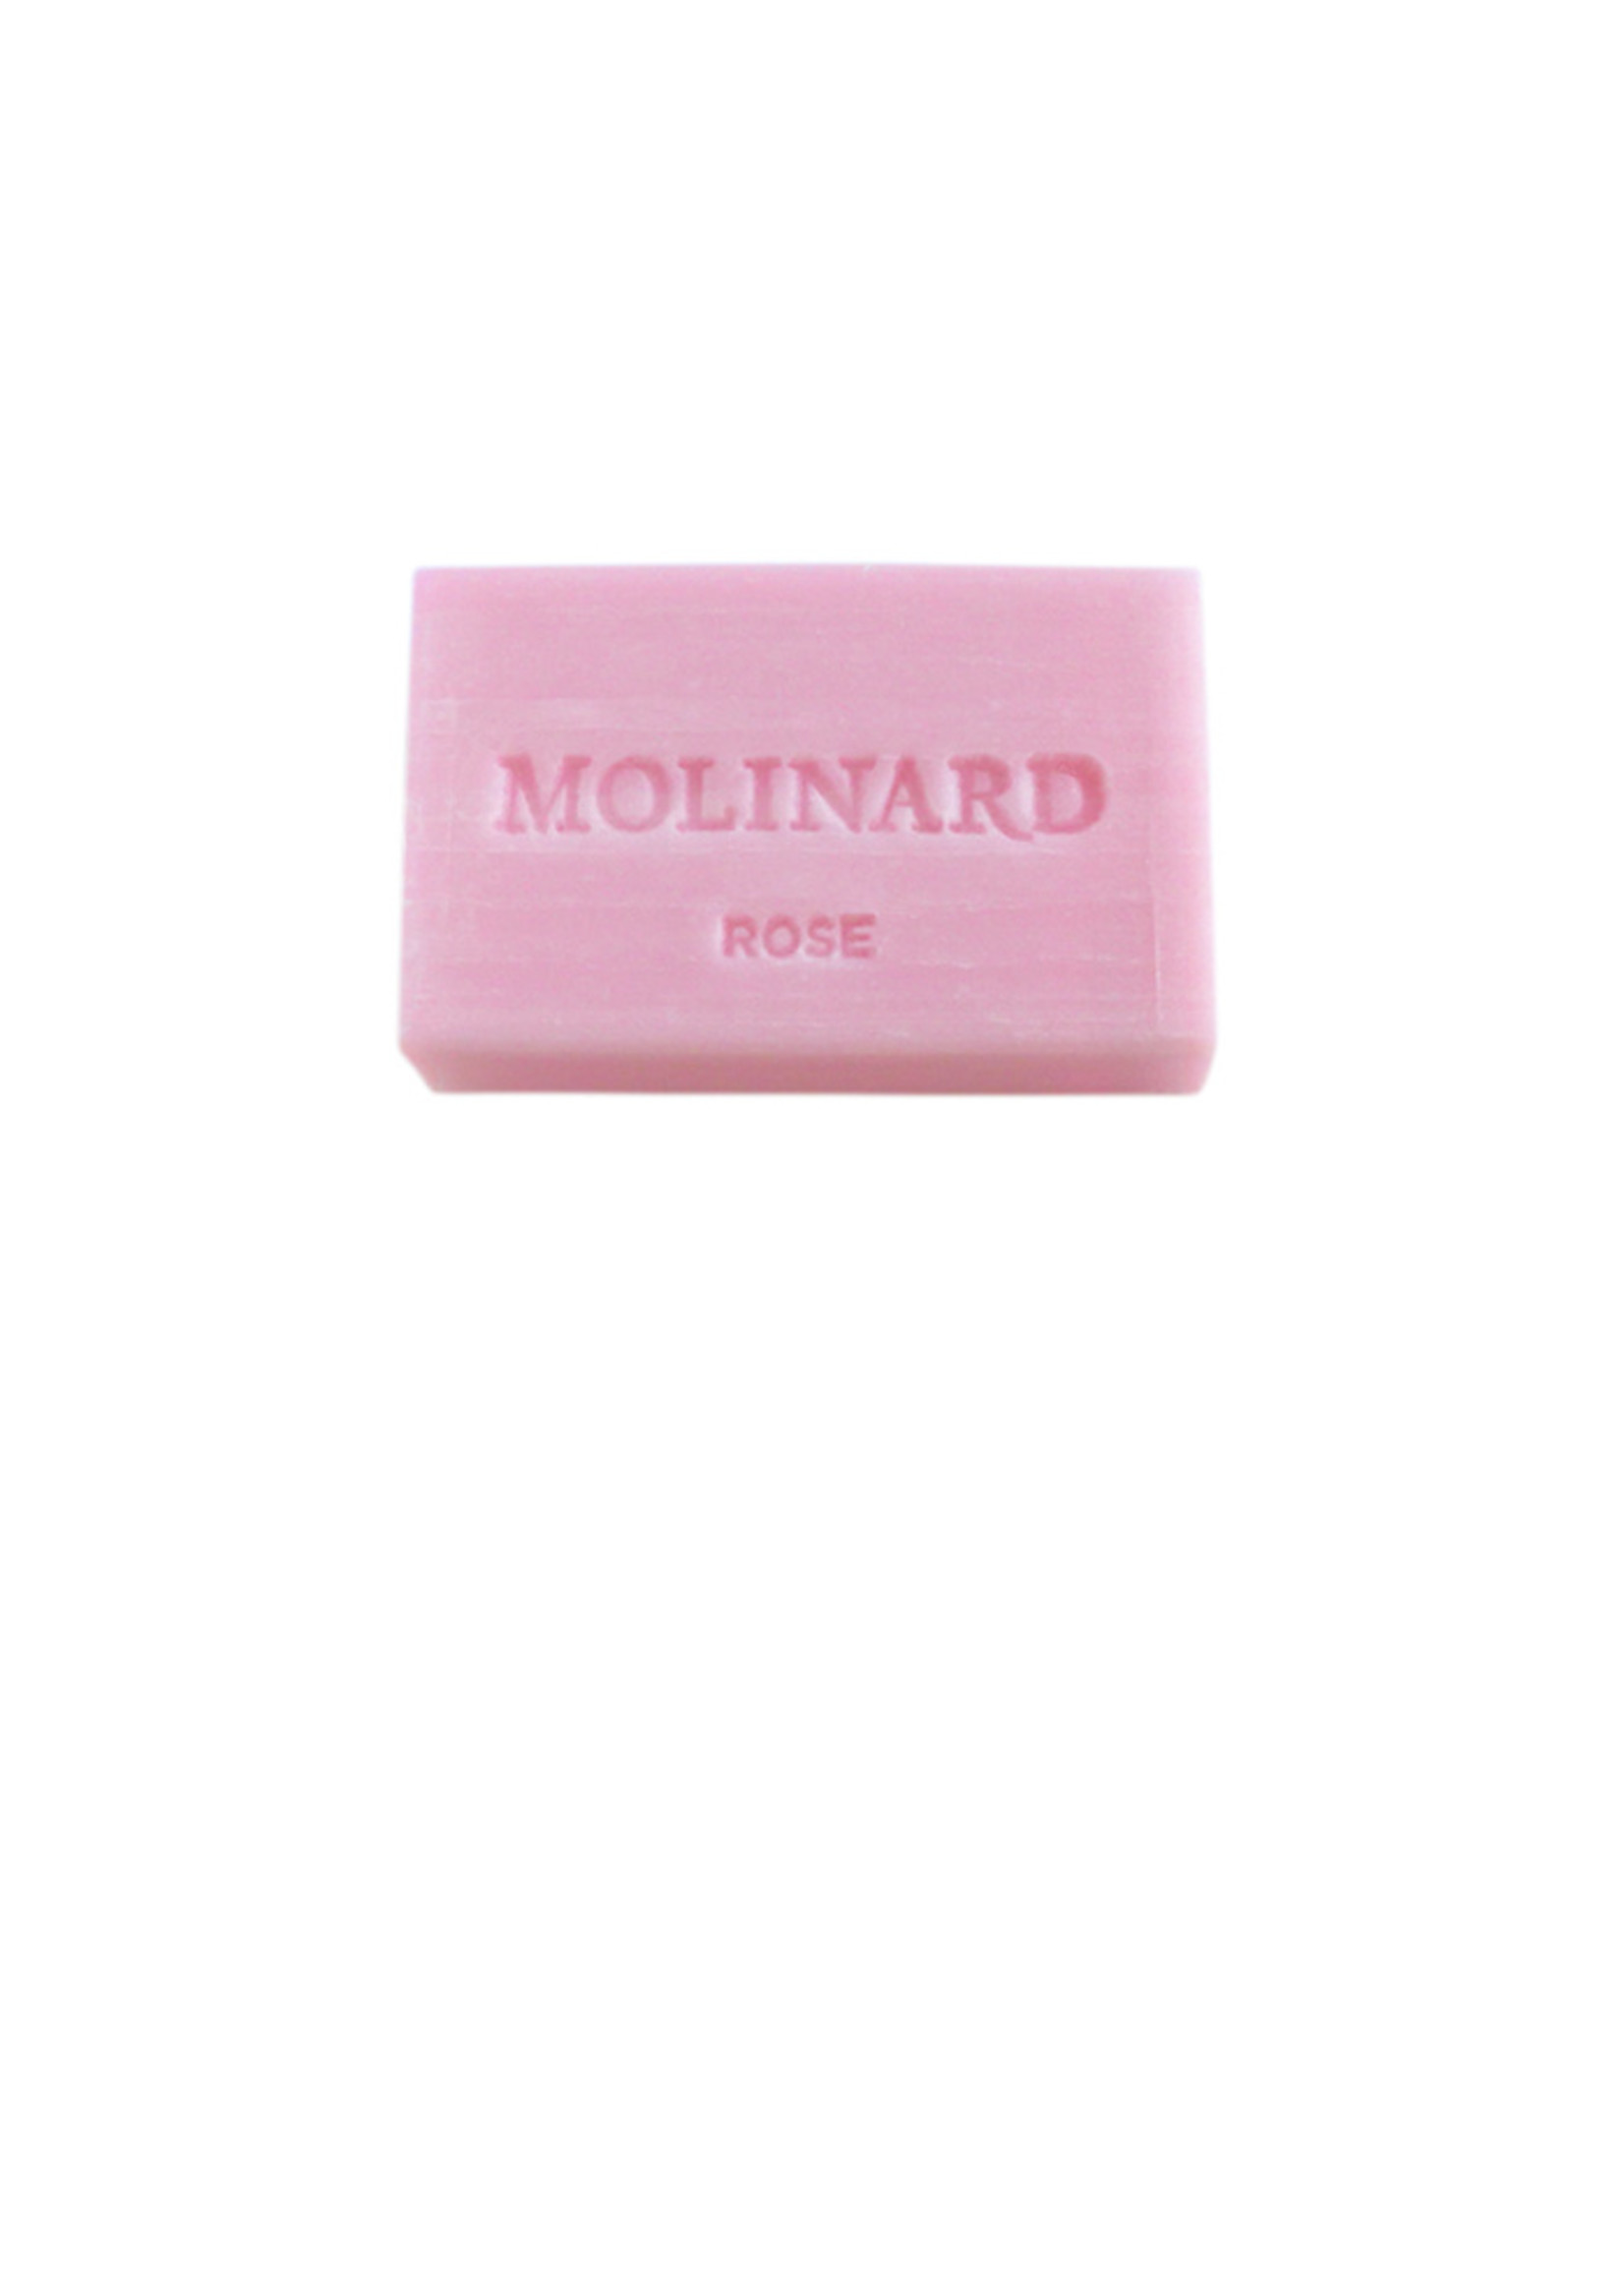 Molinard Rose Soap - Les Savons Artisanaux de Molinard